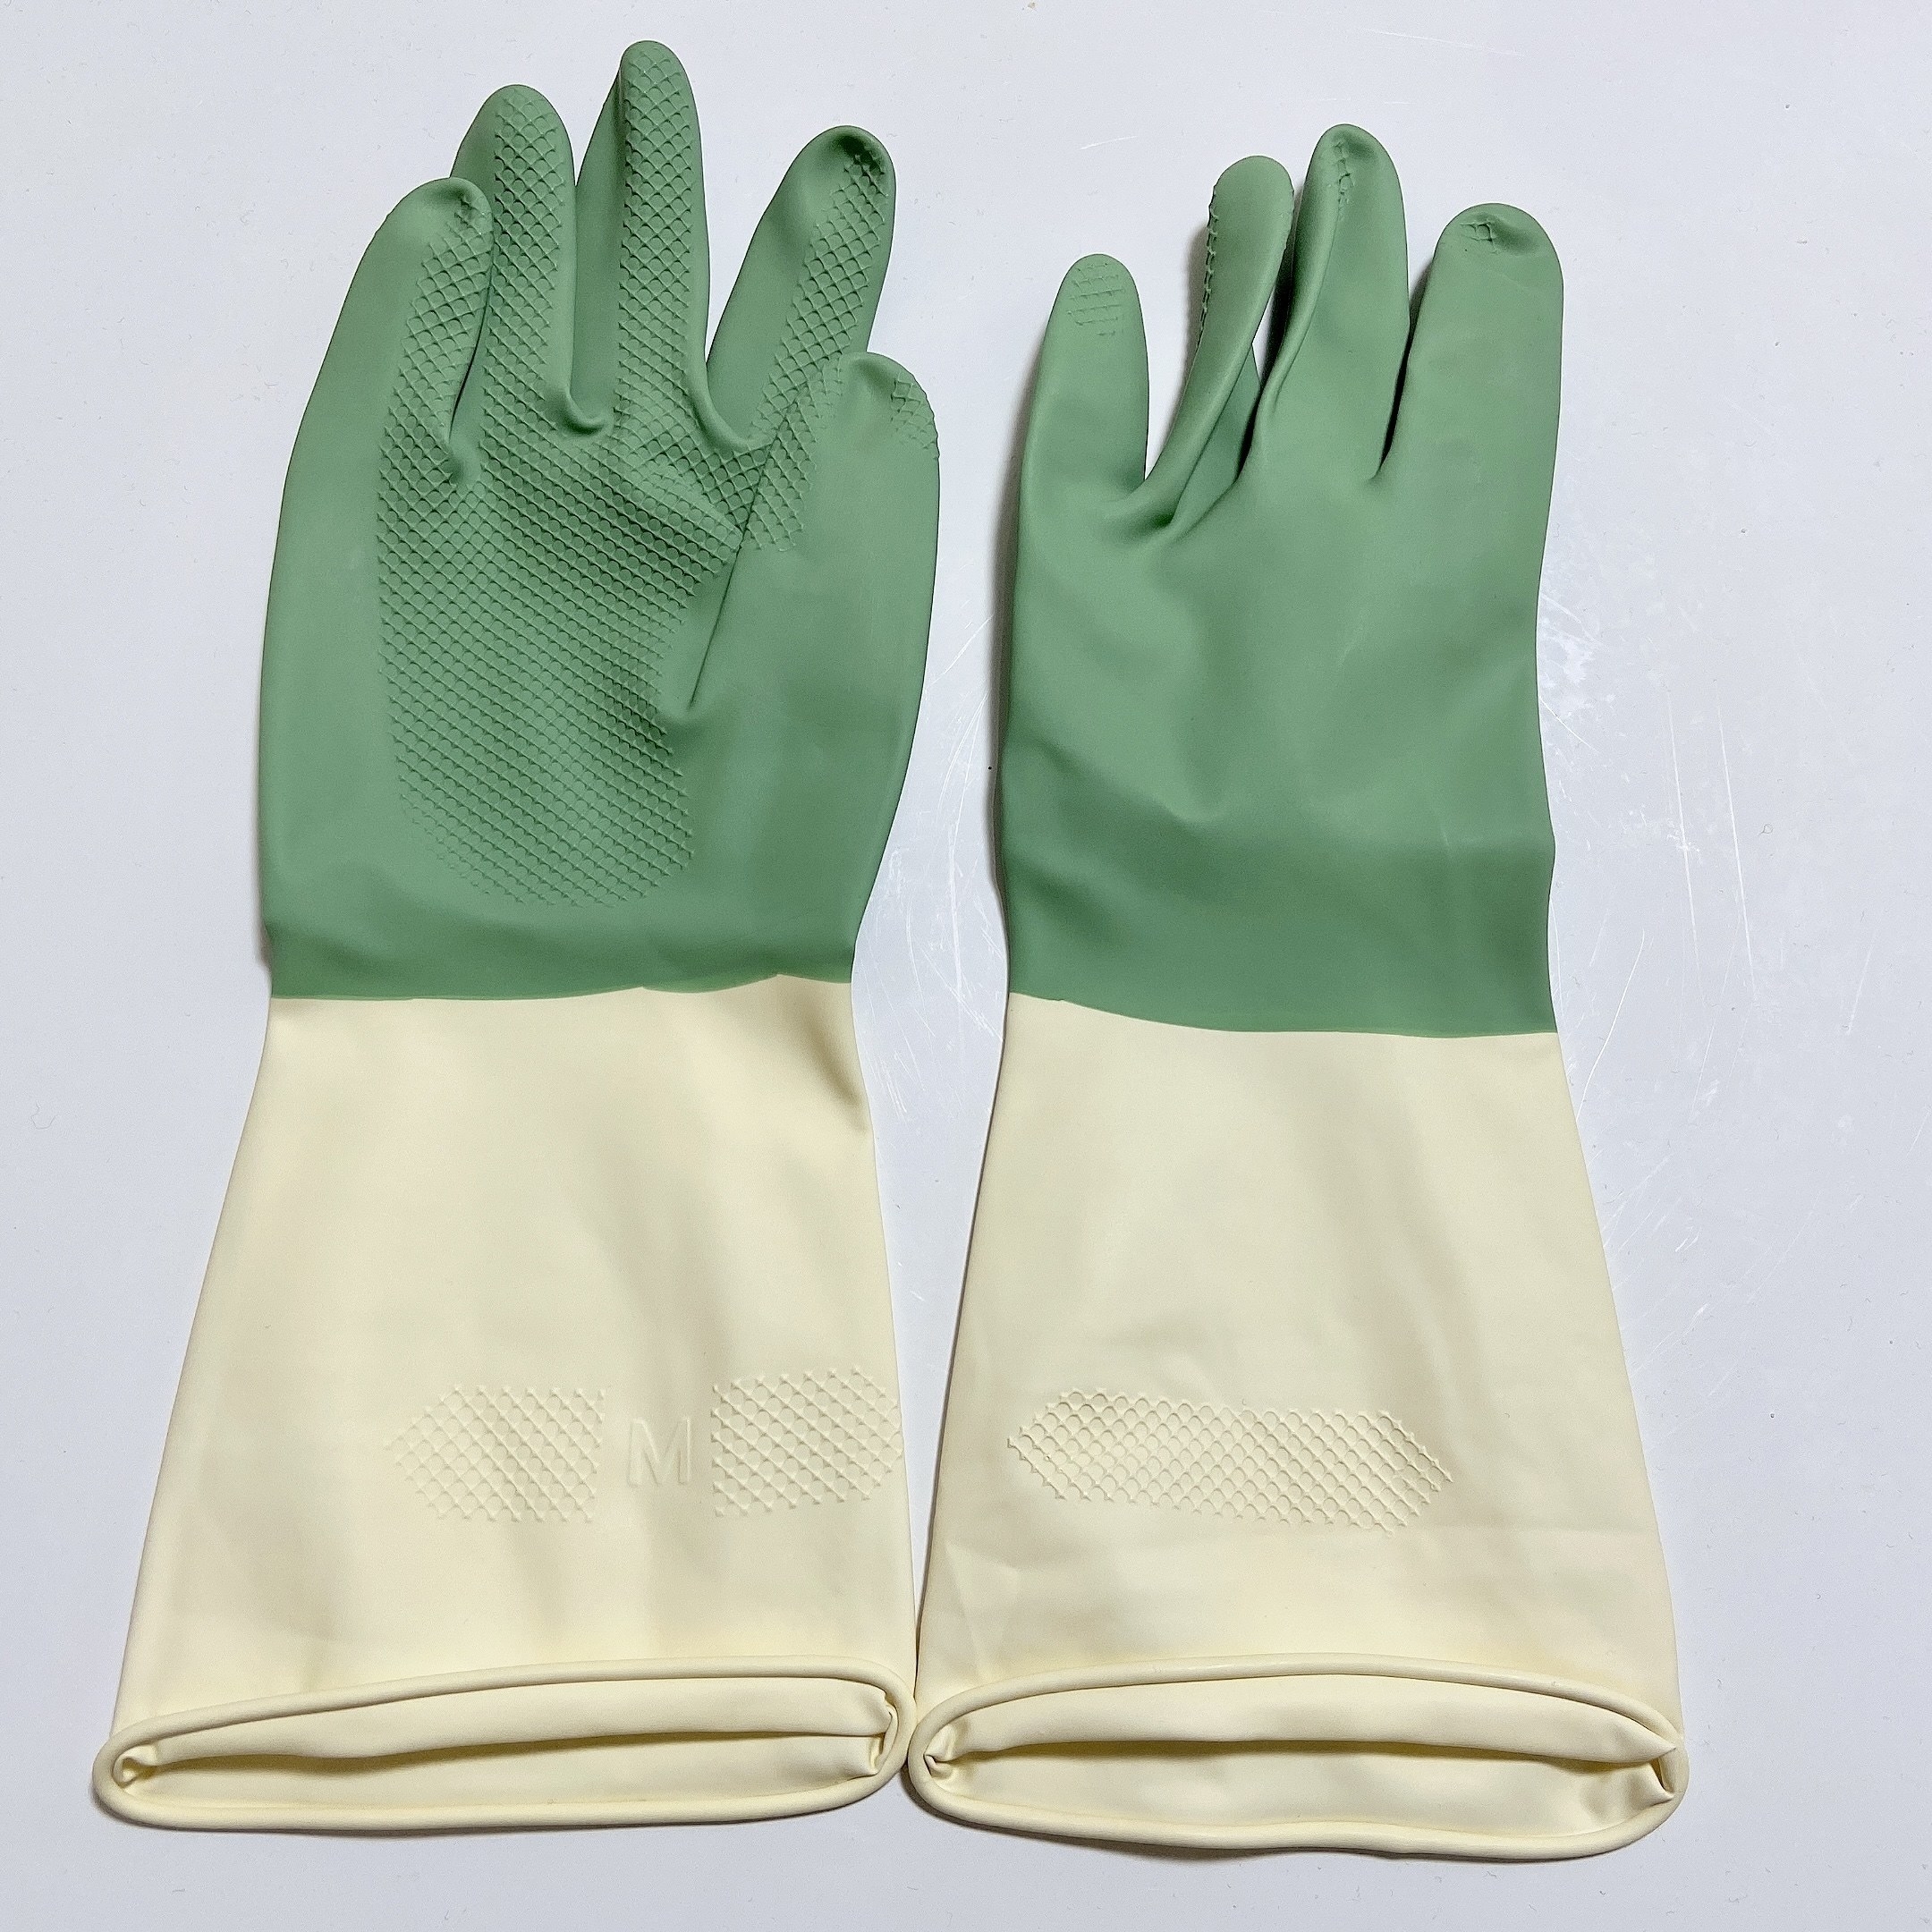 ★IKEA（イケア）のオススメキッチンアイテム「RINNIG リンニング 掃除用手袋」可愛くて便利 フィットする